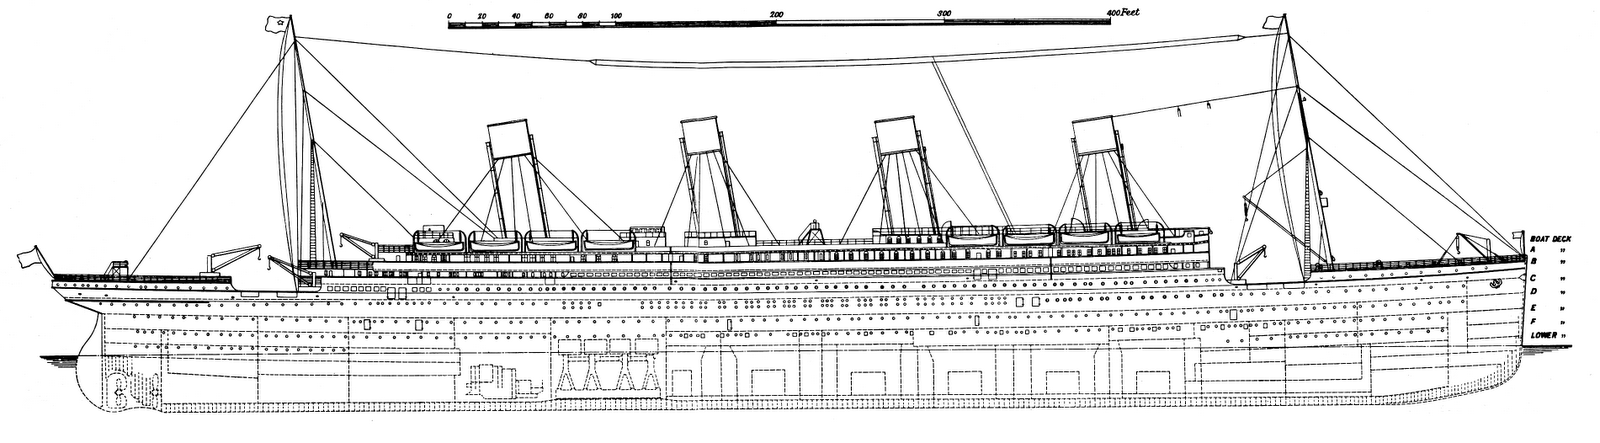 Hercolano2: TITANIC - Deckplans